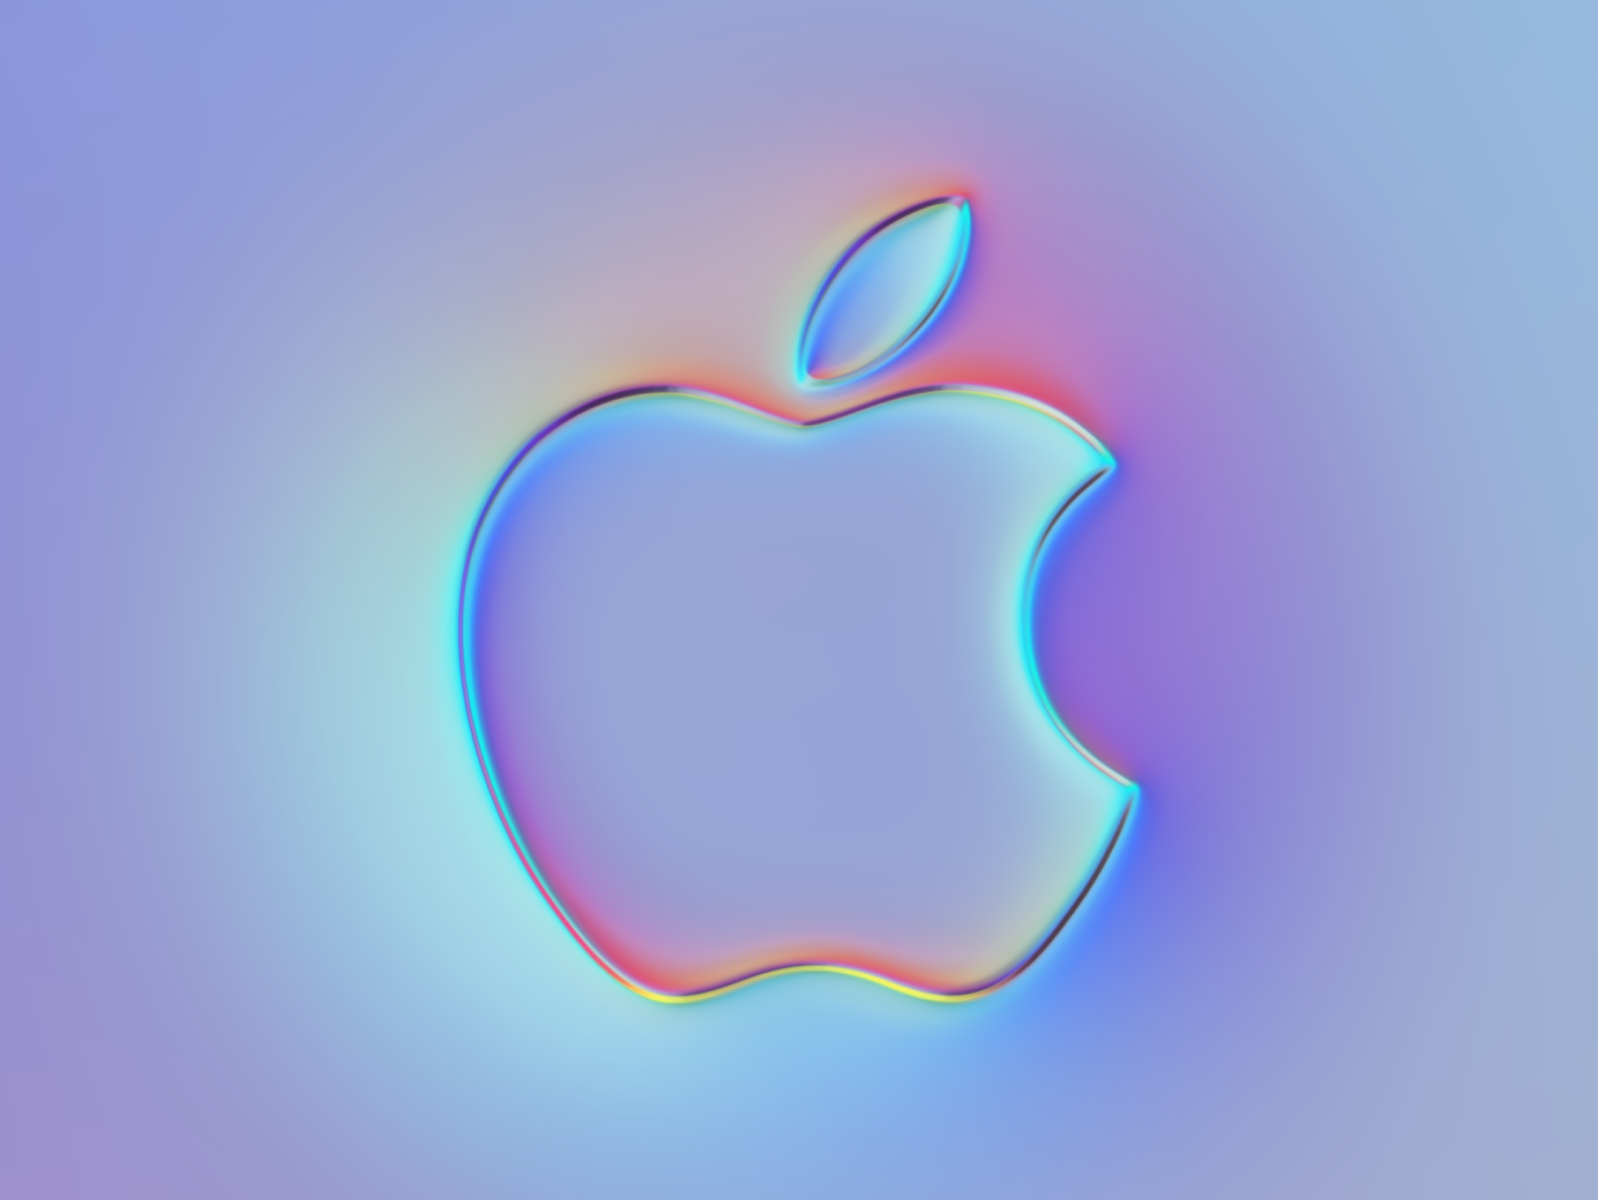 Apple Logo x Super-Neumorphism #3 by Martin Naumann on Dribbble